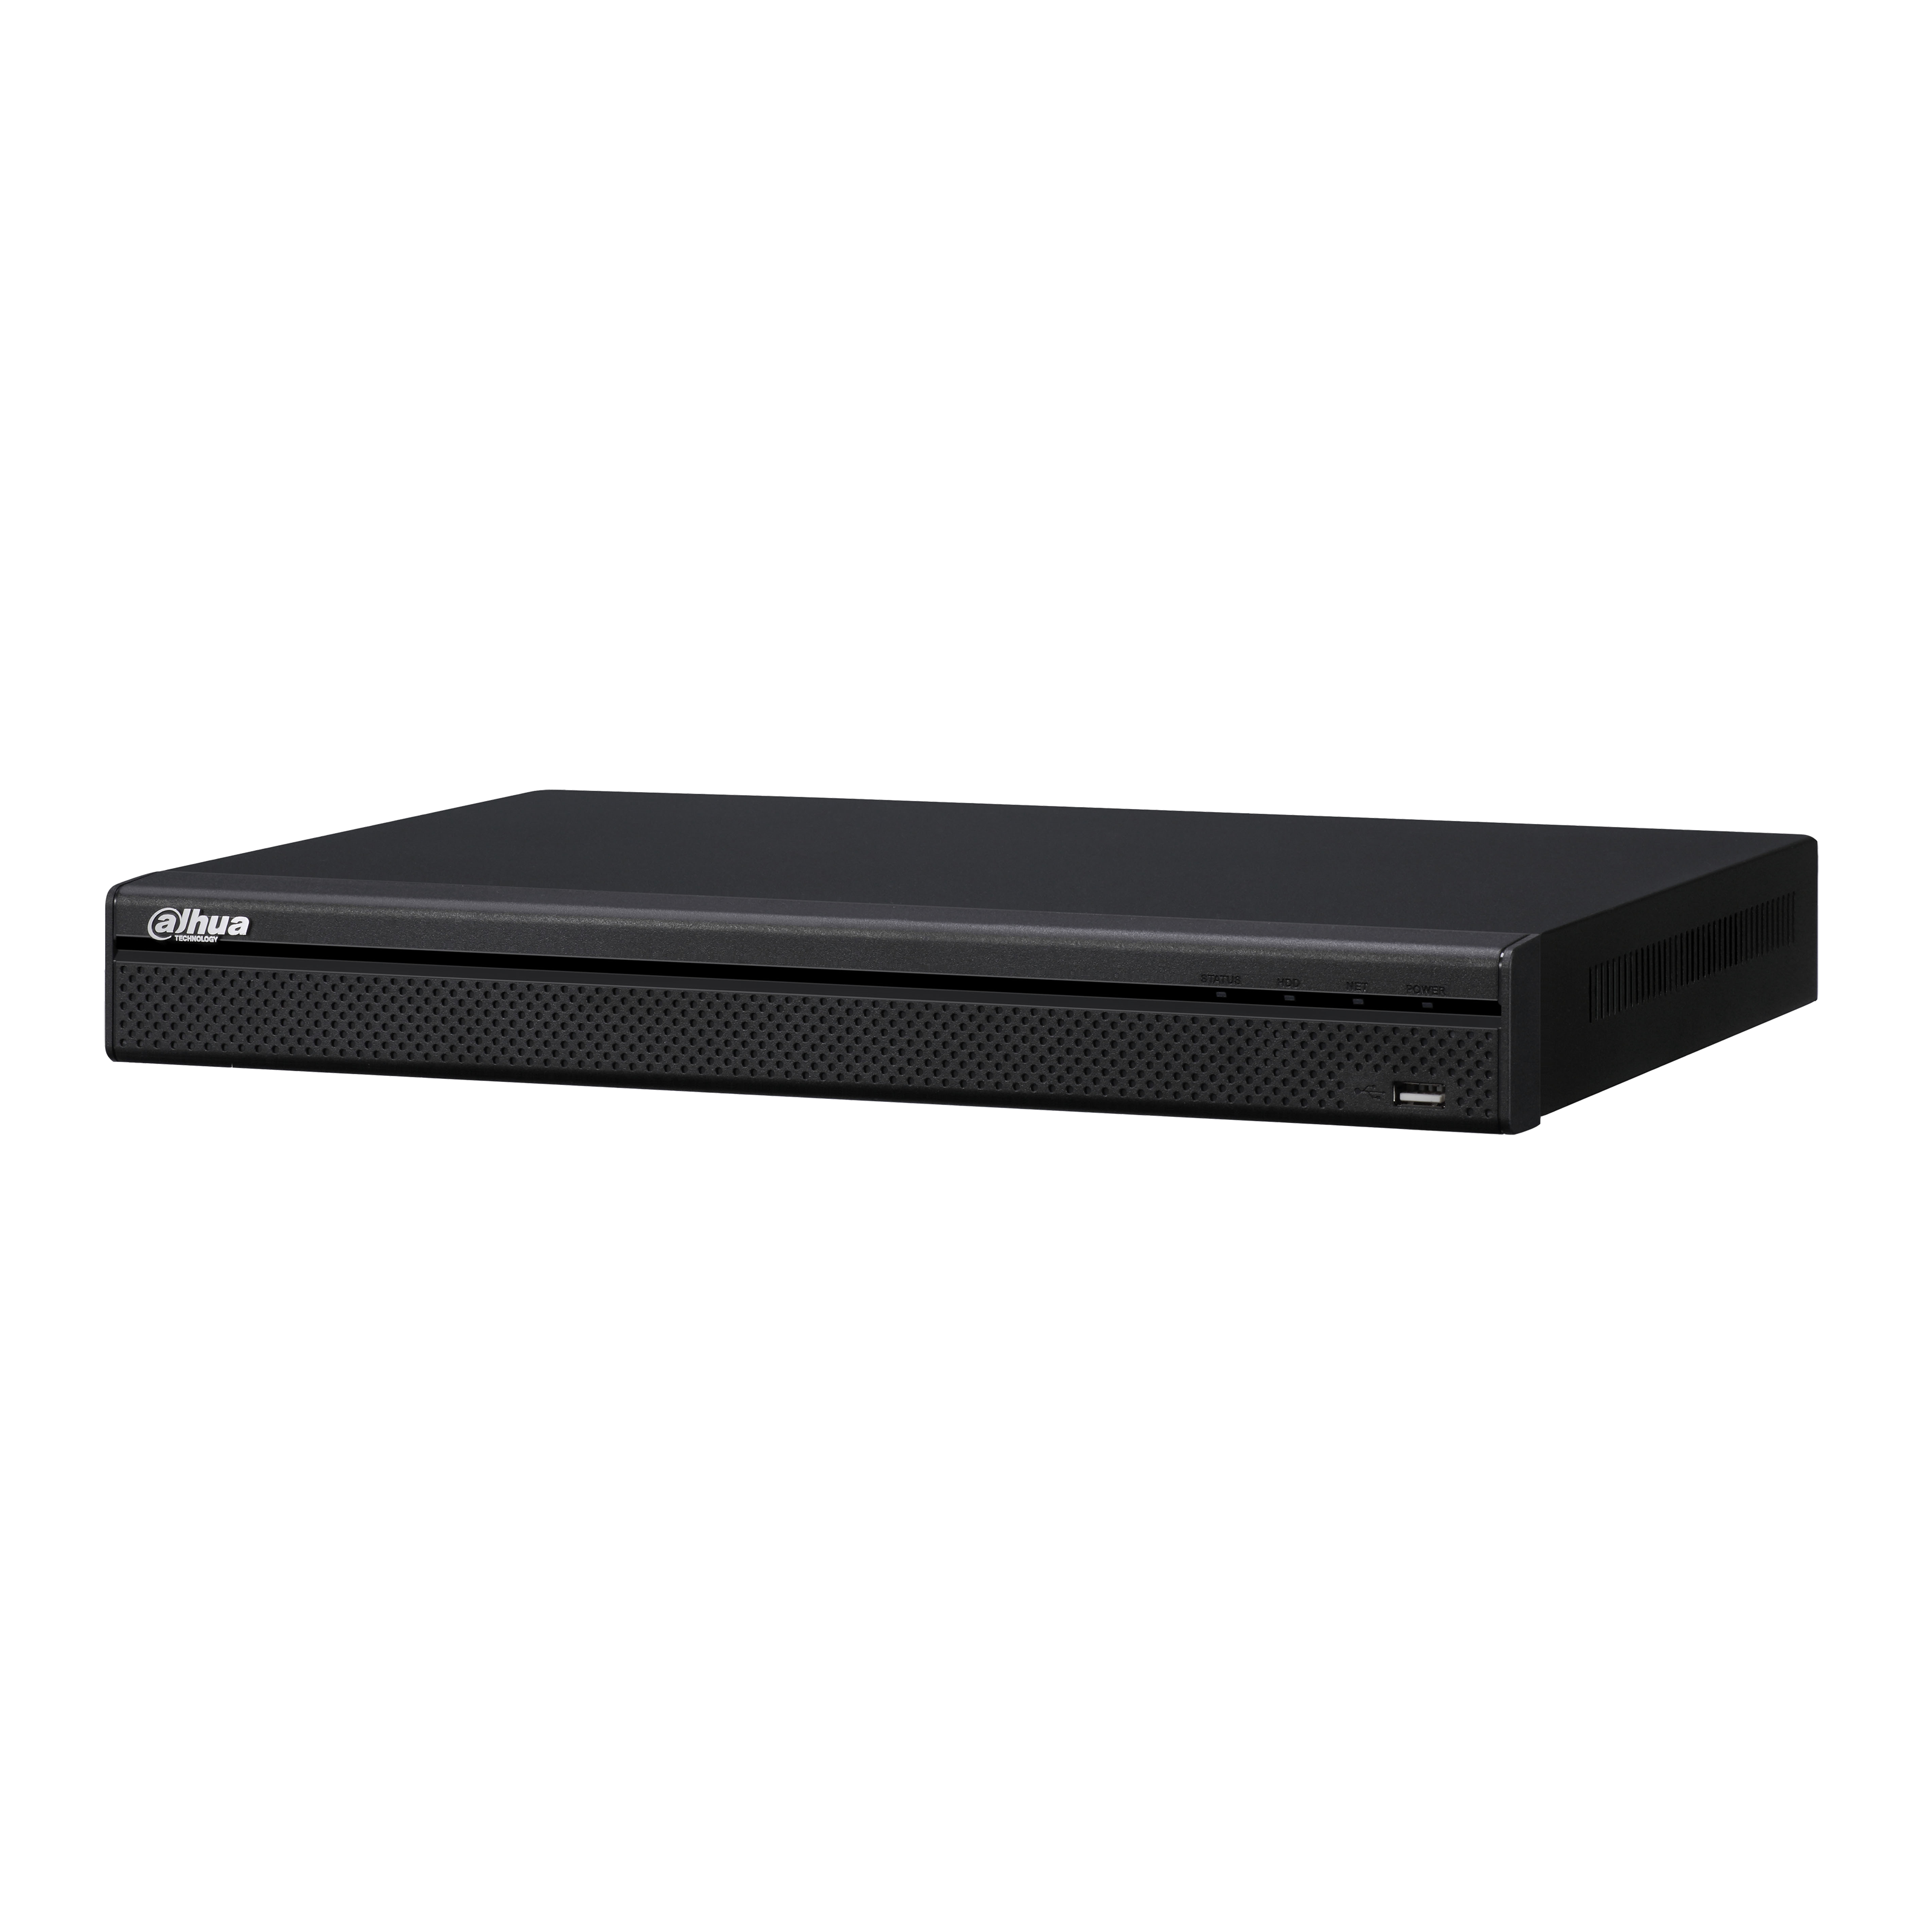 DAHUA NVR2204-P-4KS2 4 Channel 1U 2HDDs 4PoE Lite 4K H.265 Network Video Recorder